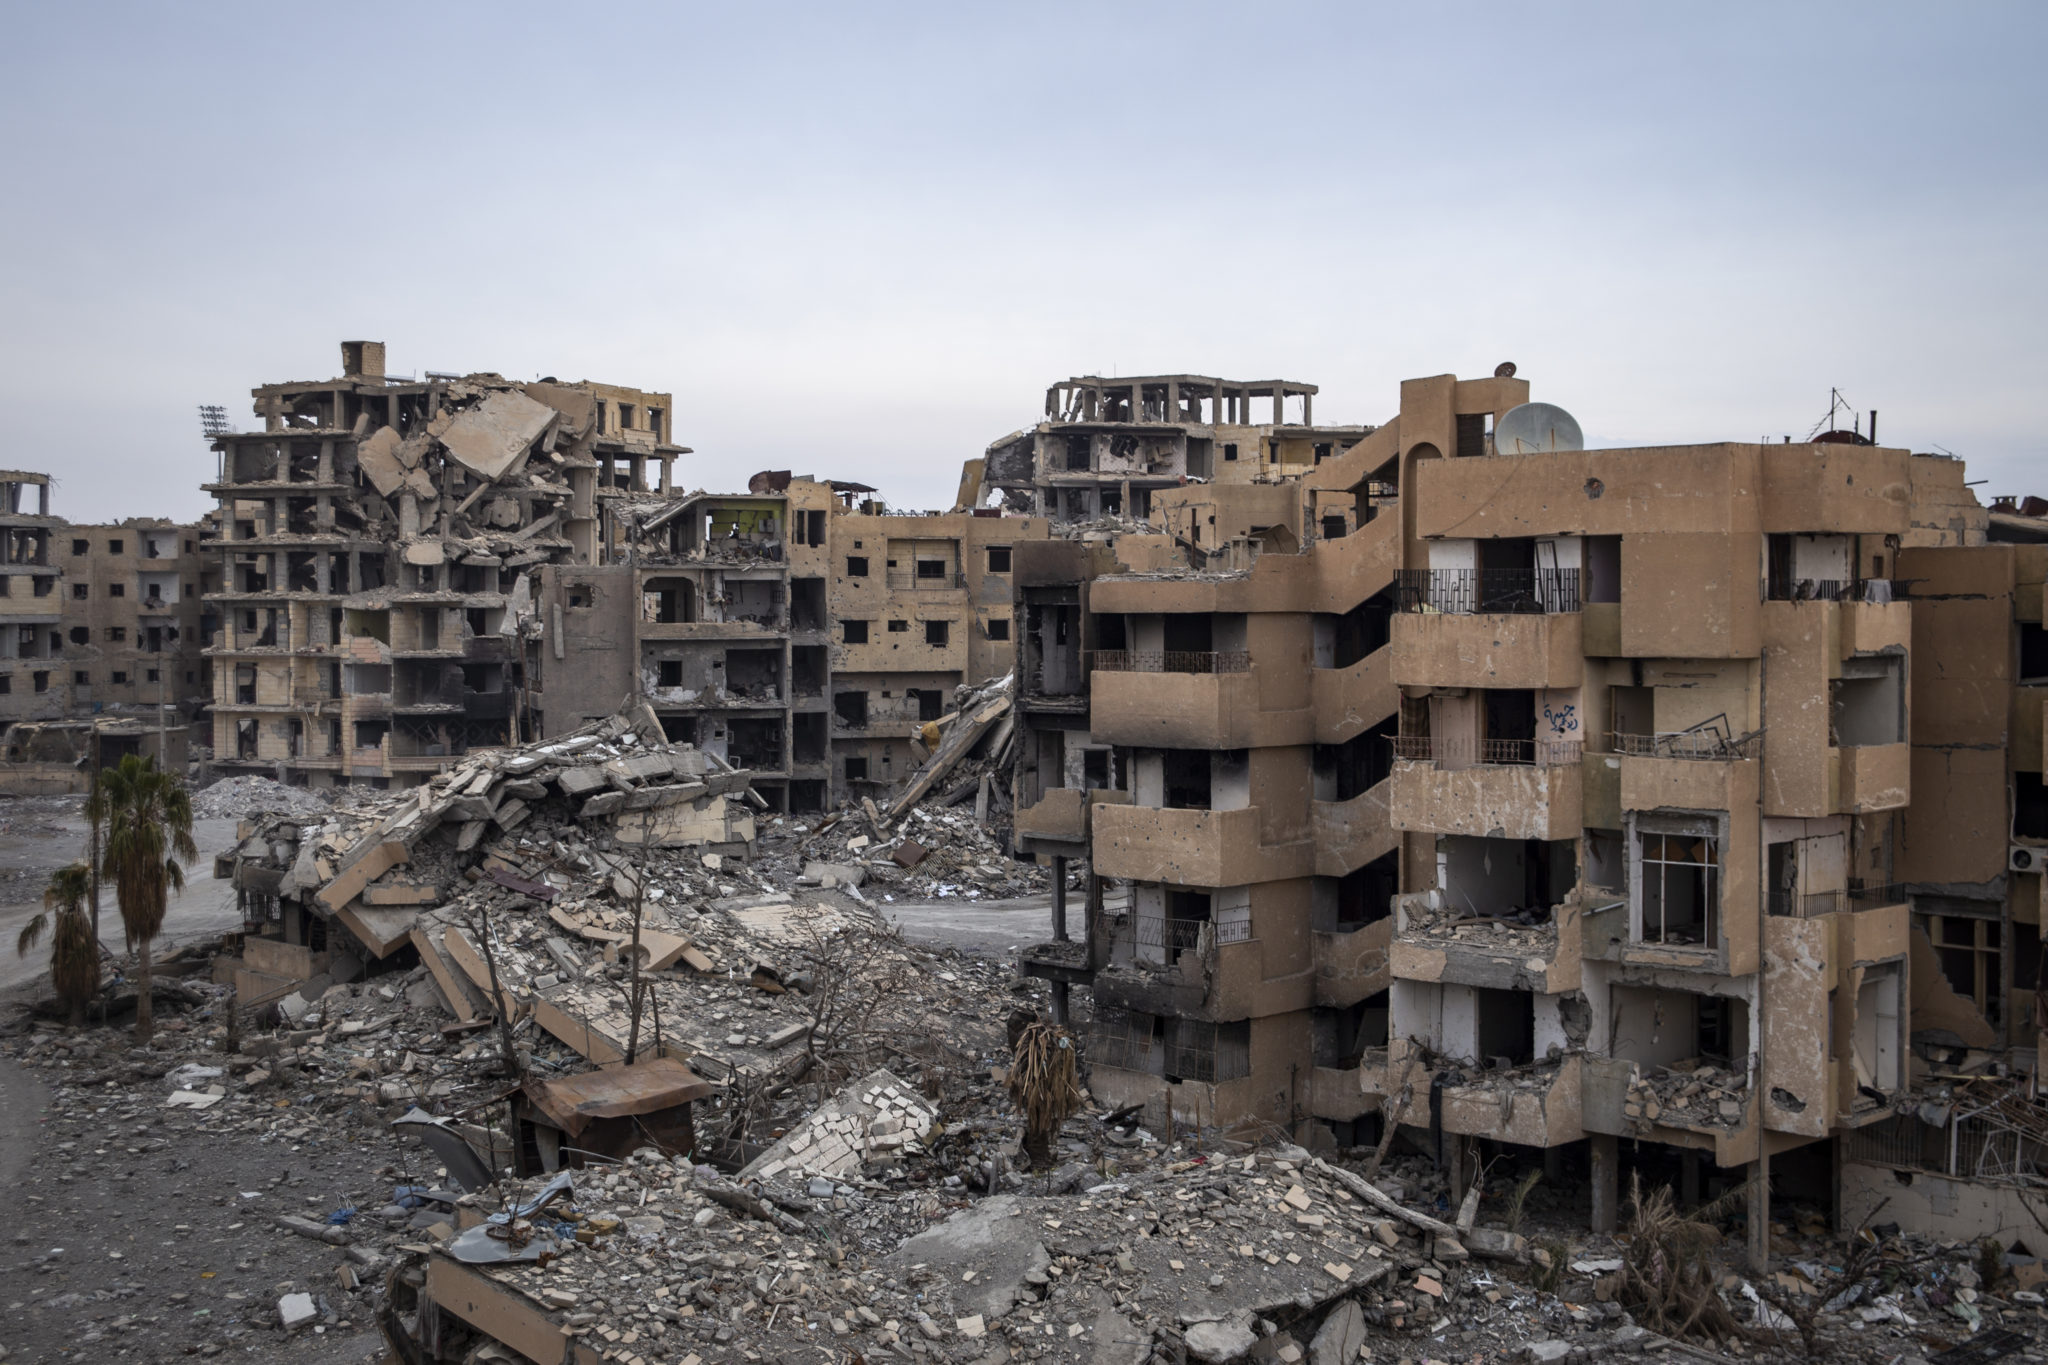 Syria: “War of annihilation”: Devastating Toll on Civilians, Raqqa – Syria